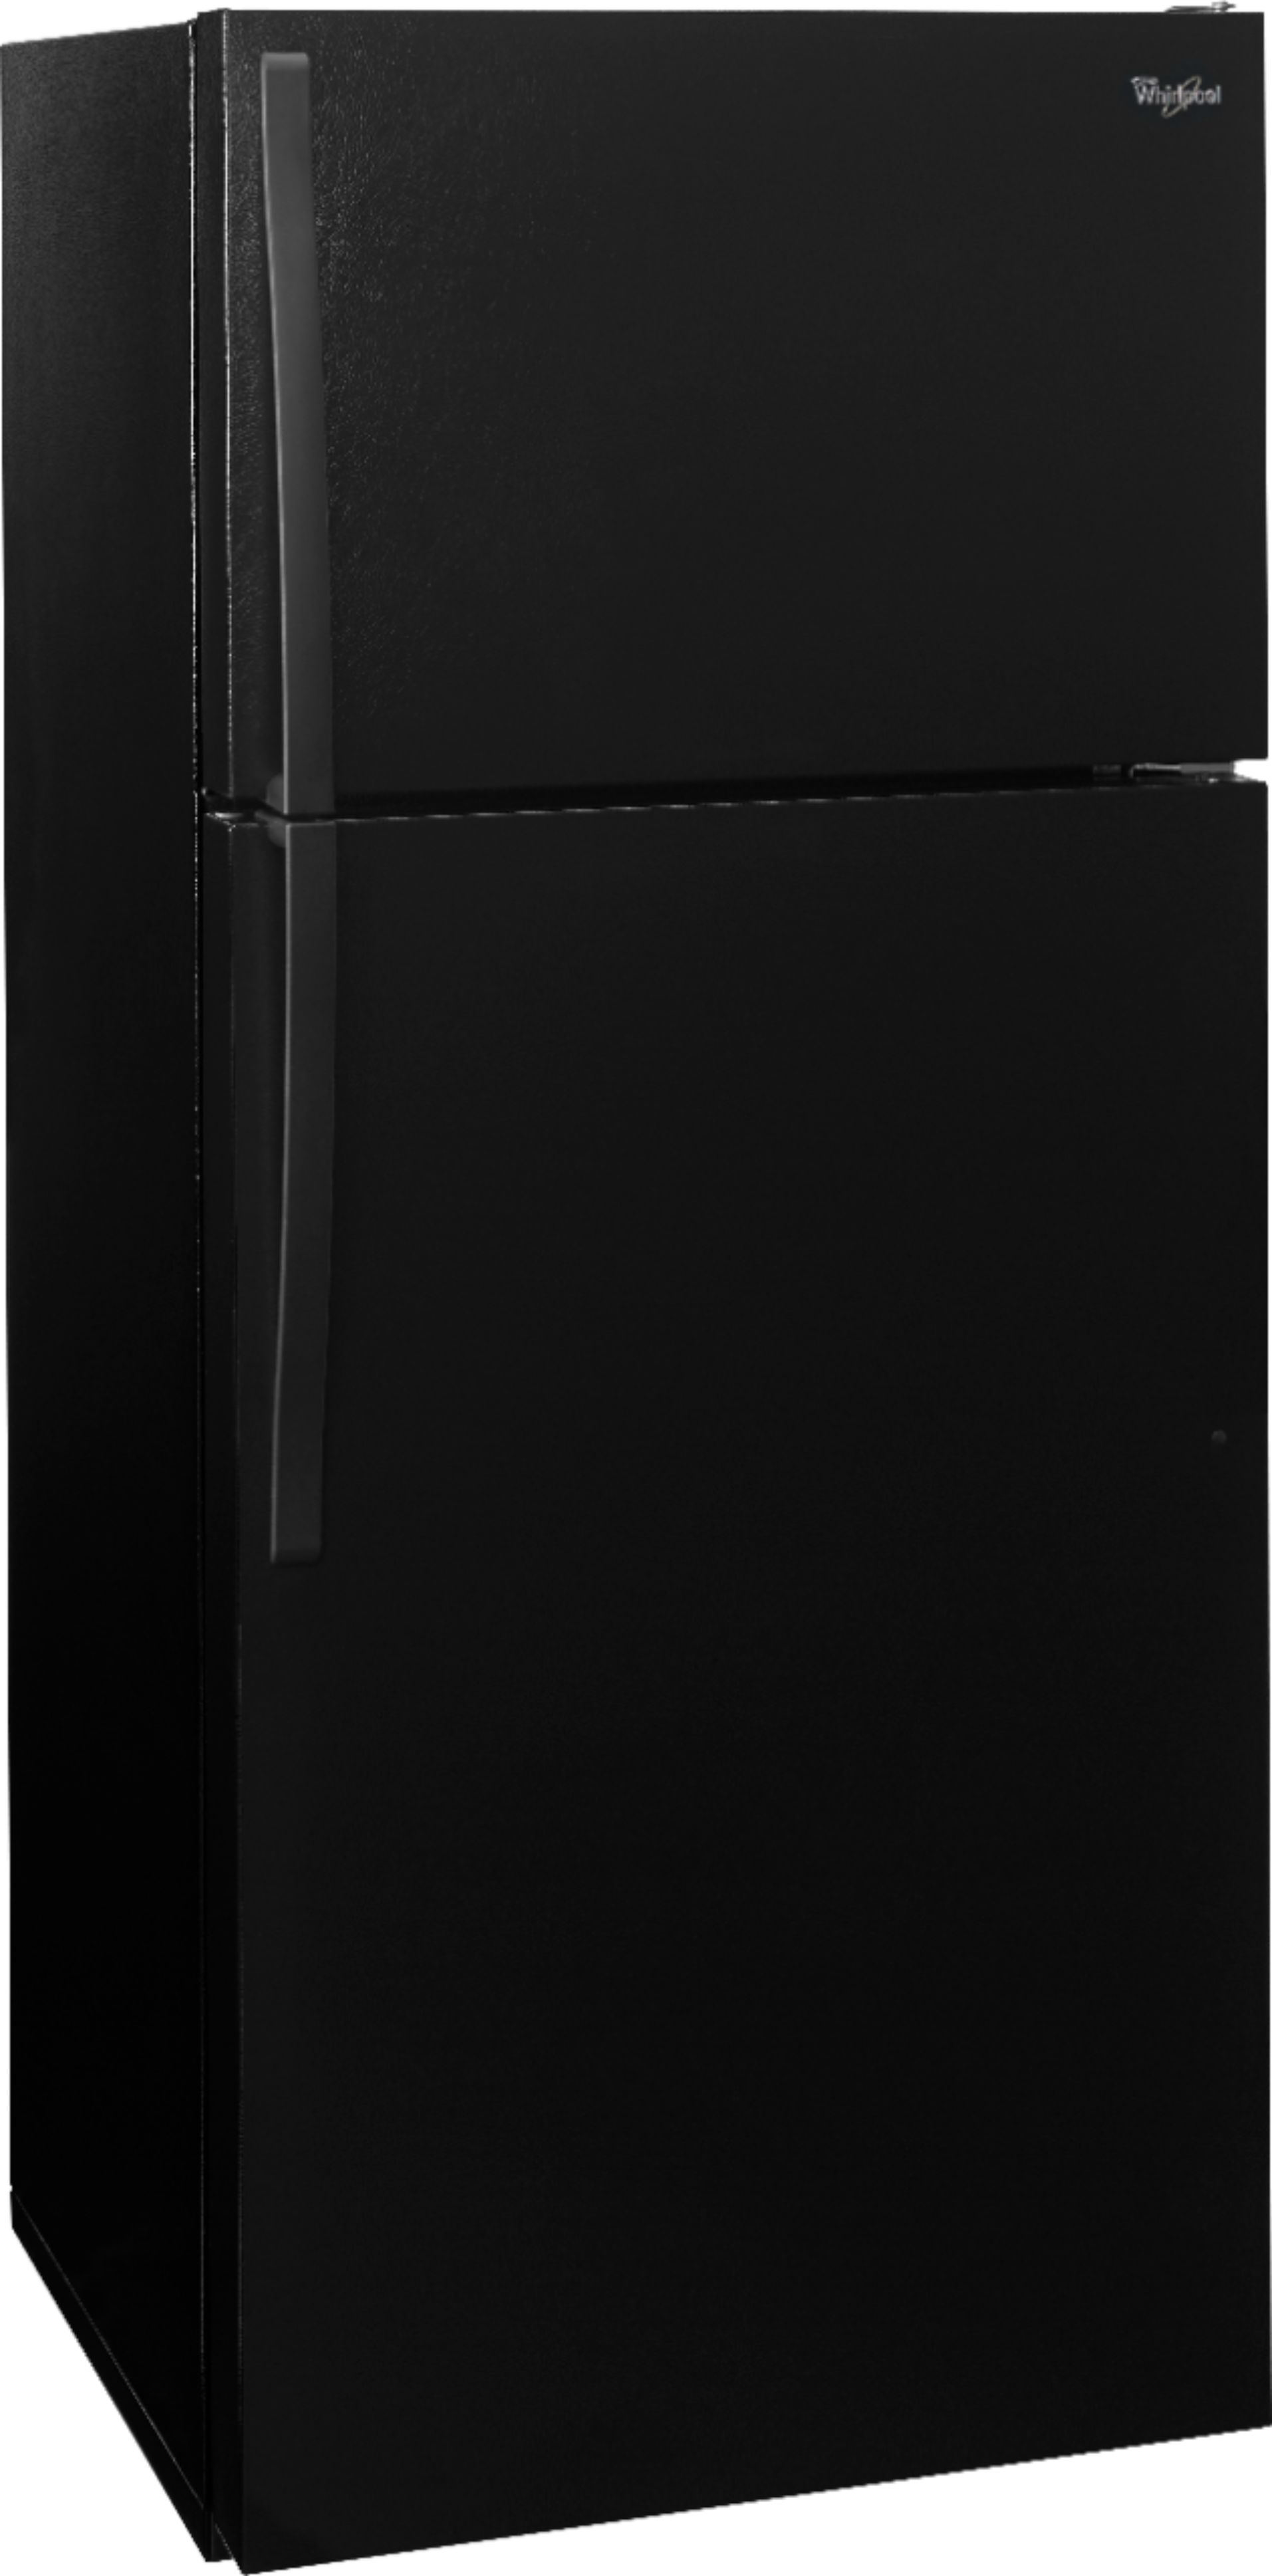 Angle View: Haier - 11.6 Cu. Ft. Top-Freezer Refrigerator - White